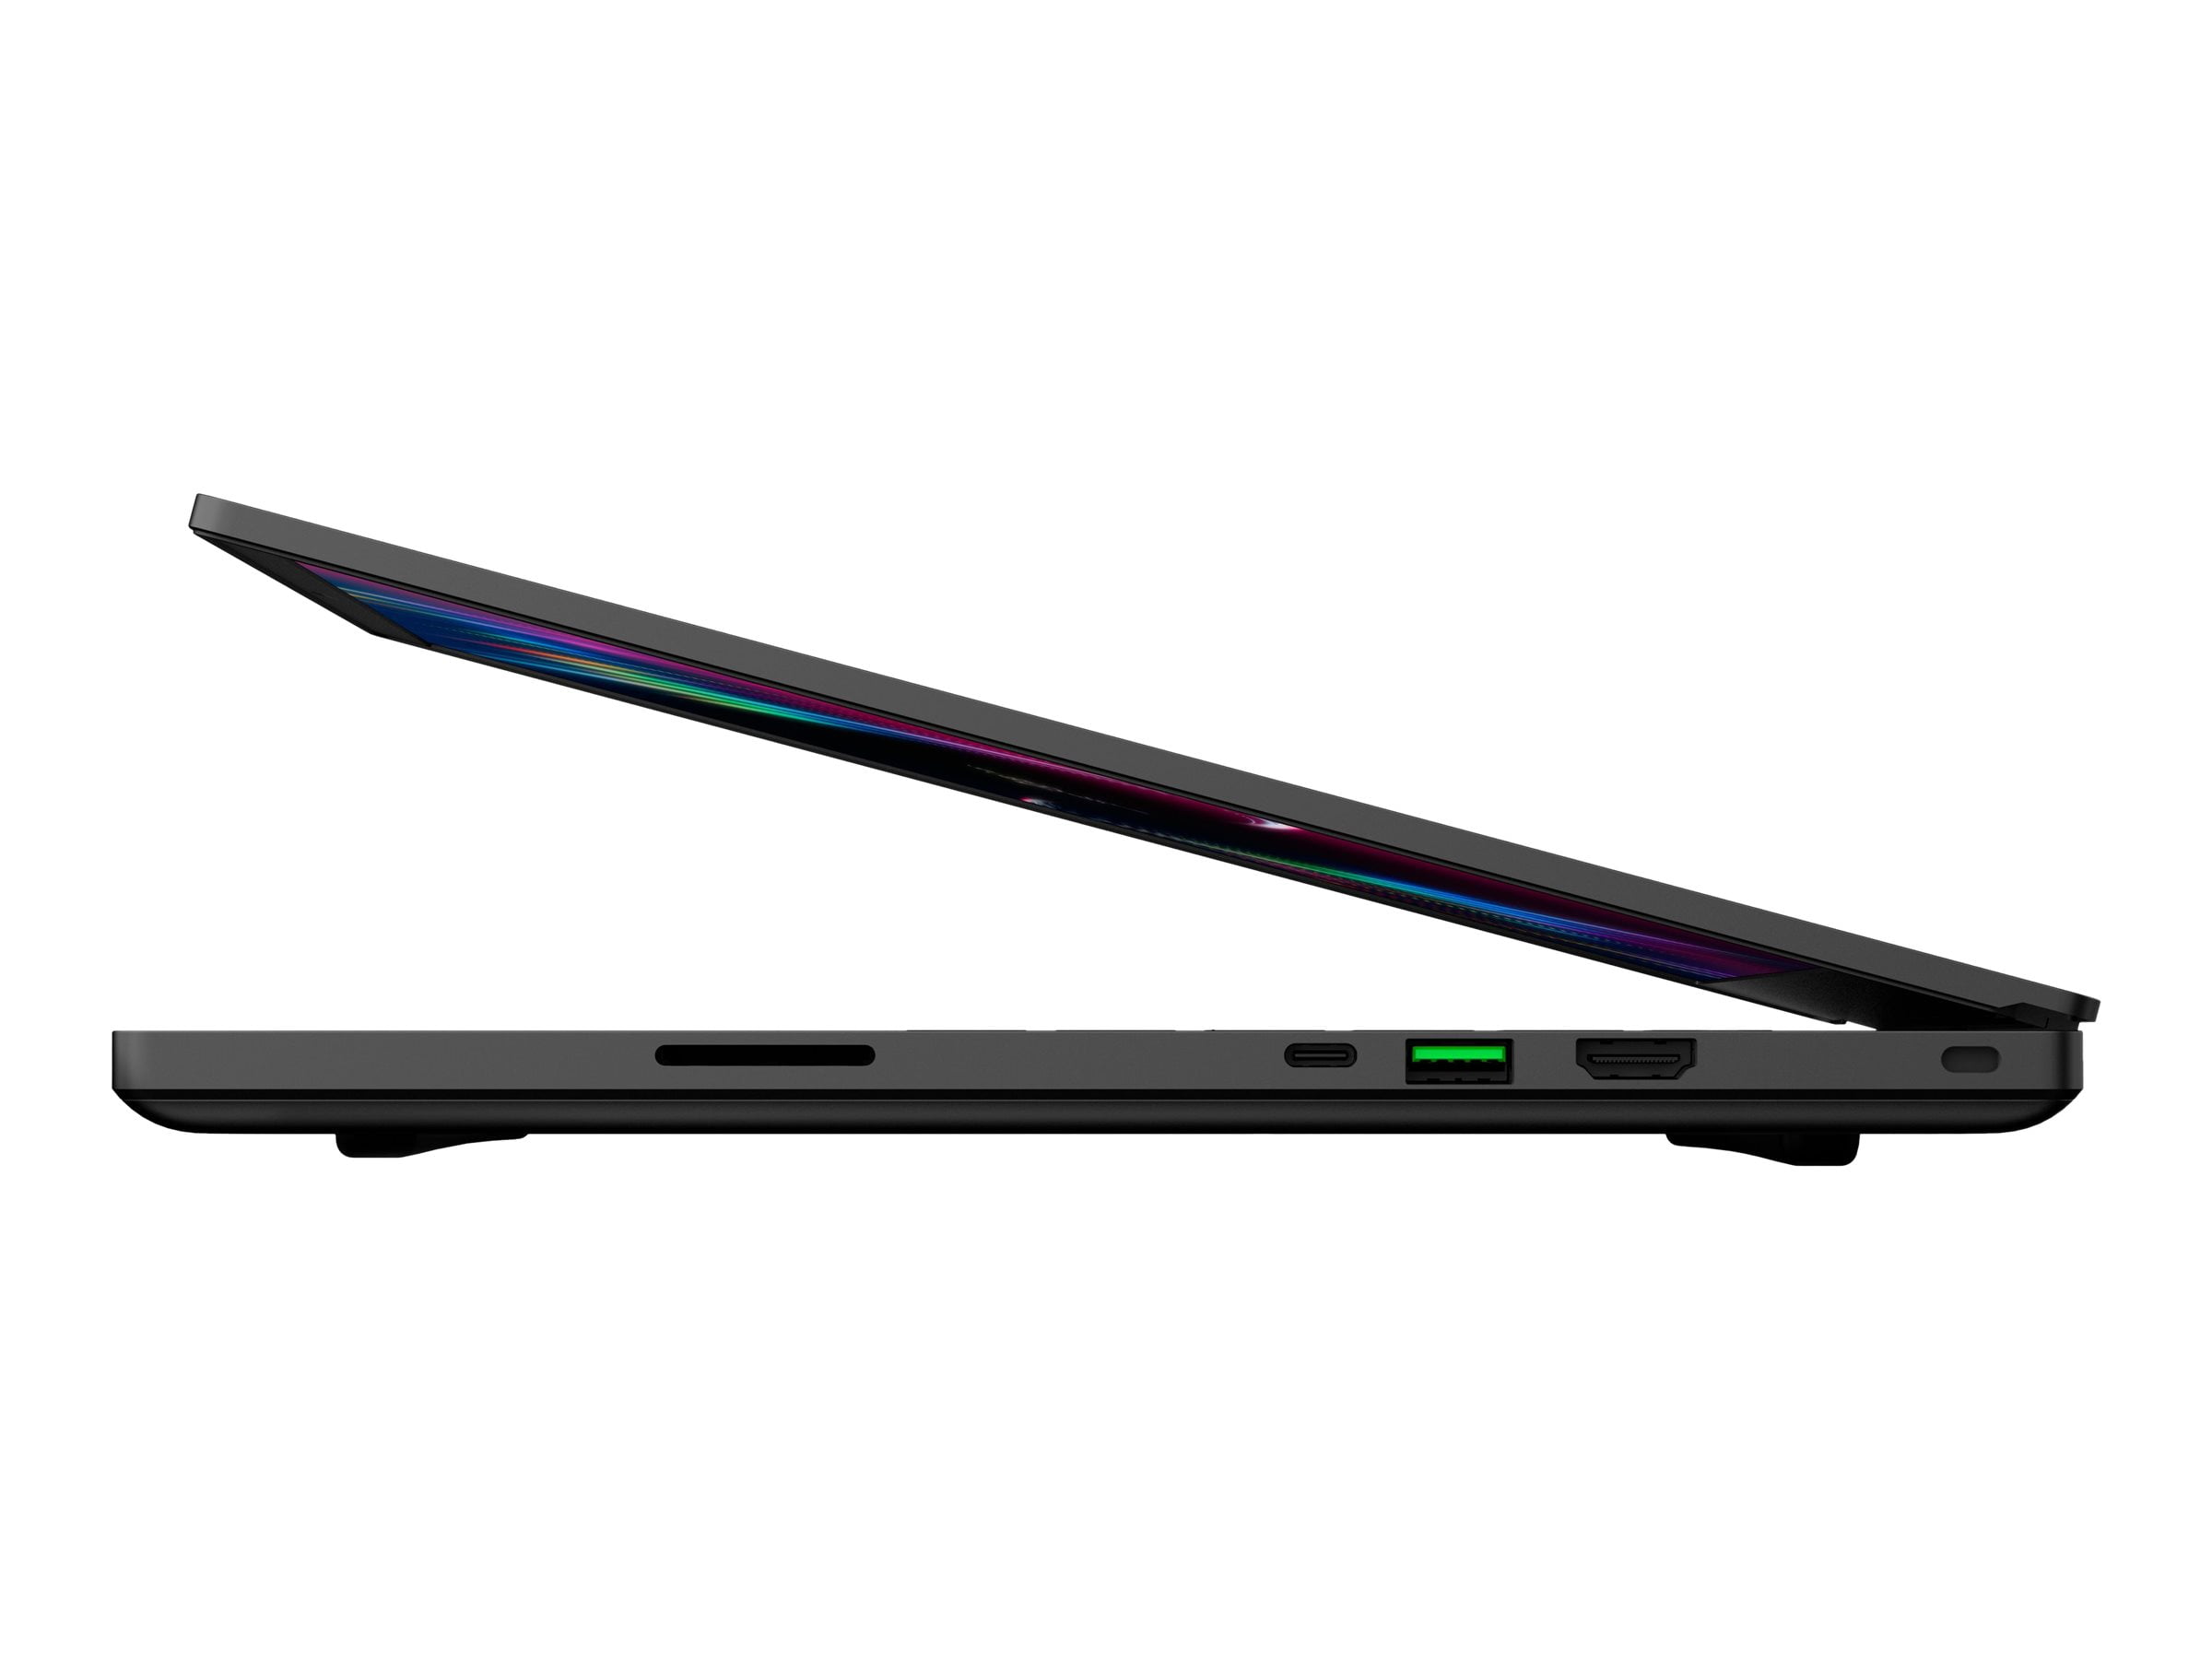  Razer Blade 15 Advanced Gaming Laptop 2020: Intel Core  i7-10875H 8-Core, NVIDIA GeForce RTX 2070 Super Max-Q, 15.6” FHD 300Hz,  16GB RAM, 512GB SSD, CNC Aluminum, Chroma RGB Lighting, Thunderbolt 3 